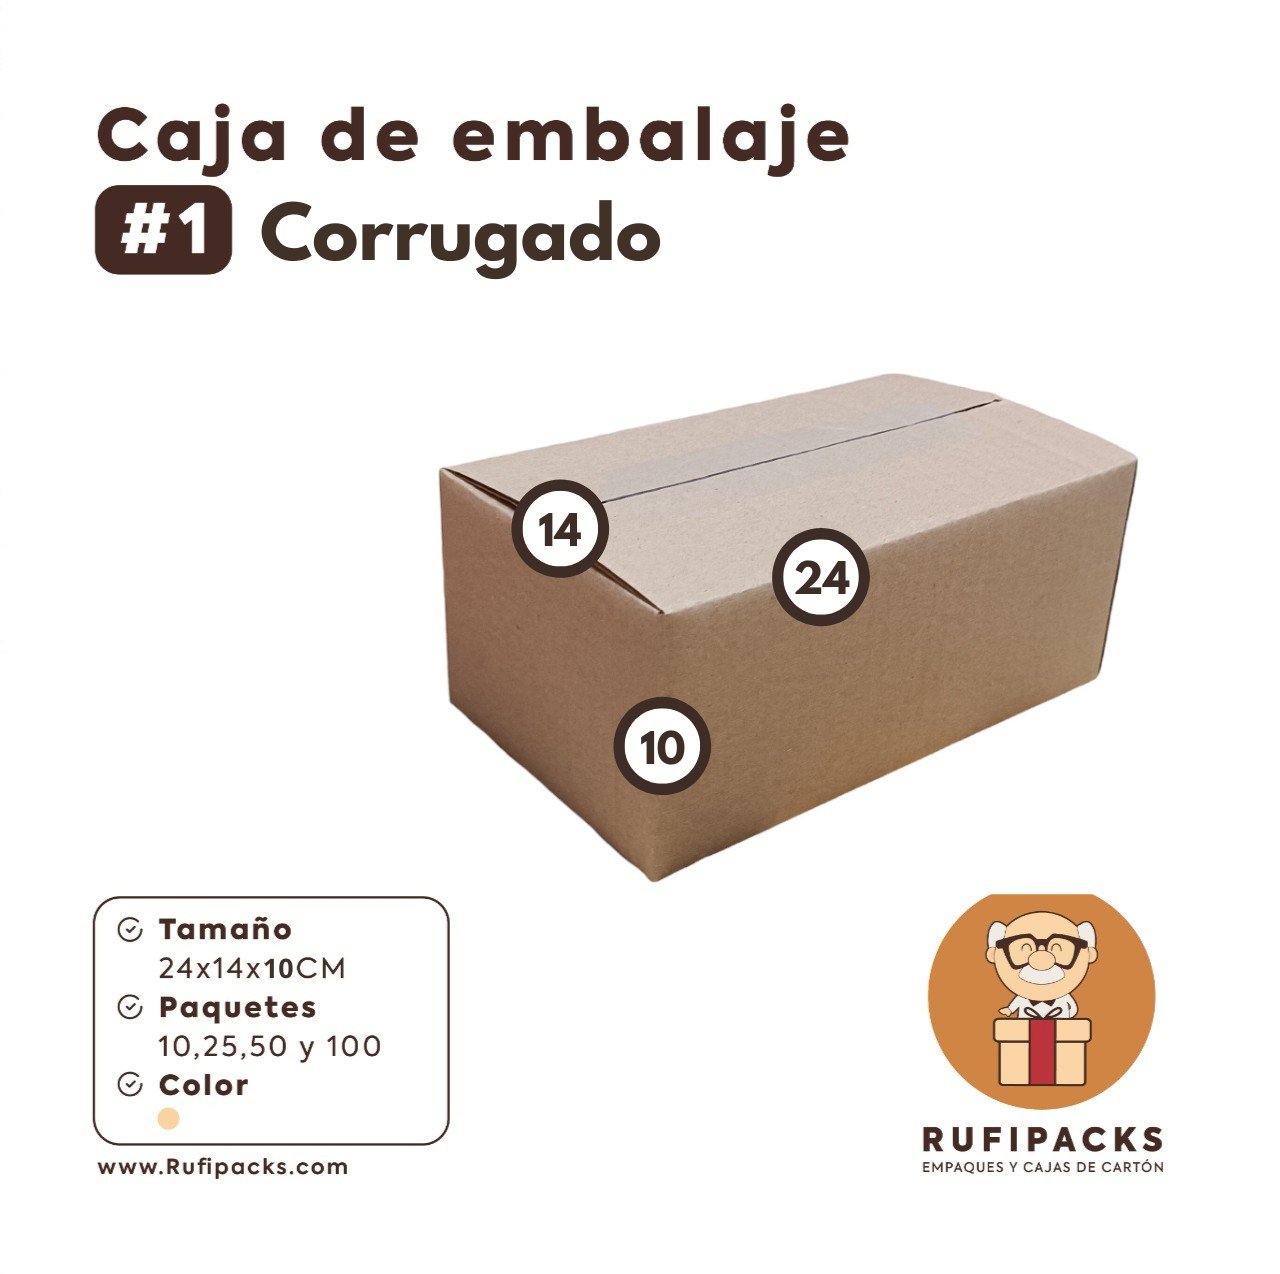 CAJA DE EMBALAJE #1 24X14X10 CORRUGADO - Rufipacks